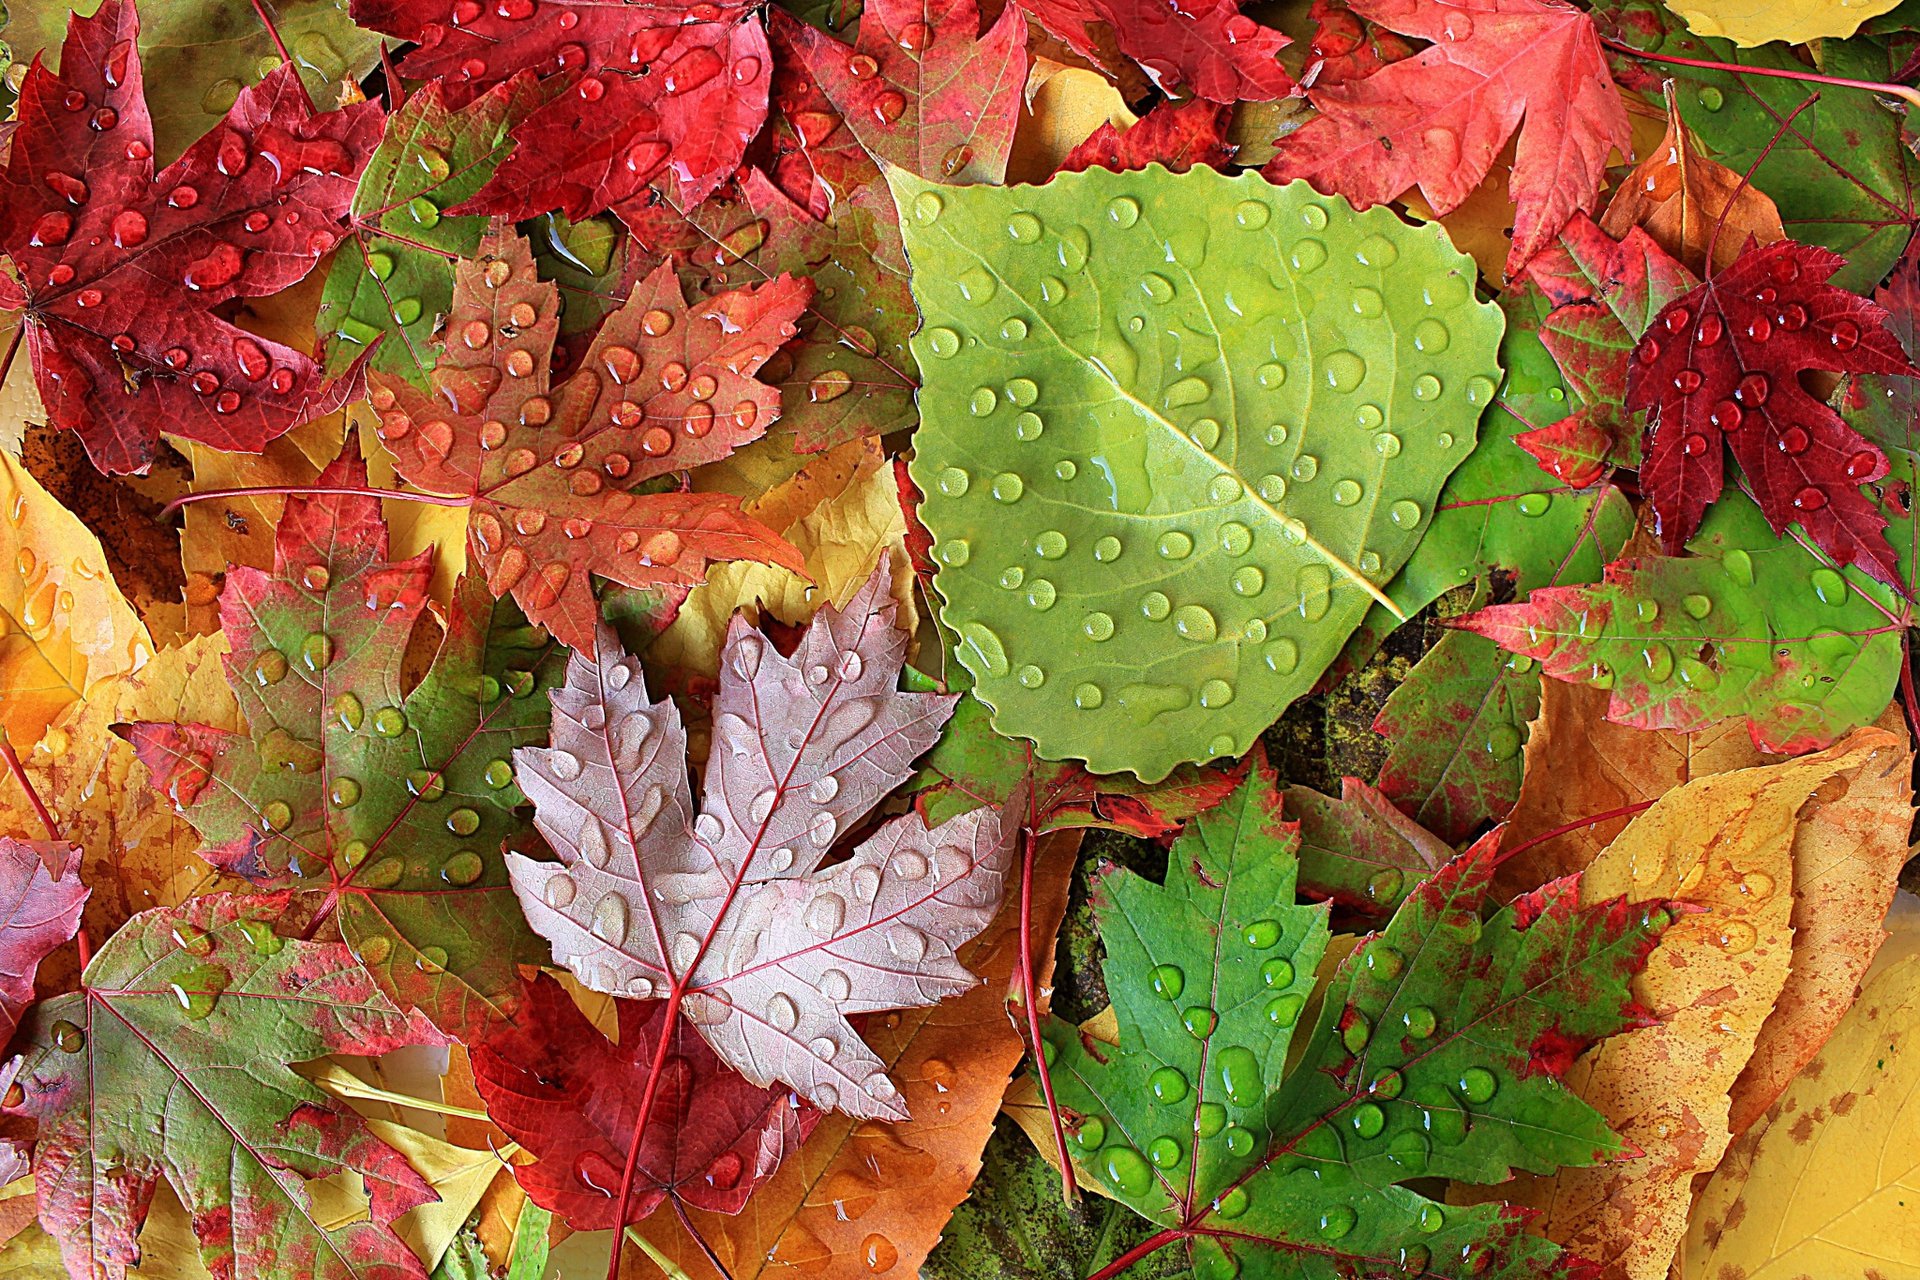 Autumn fallen leaves after rain